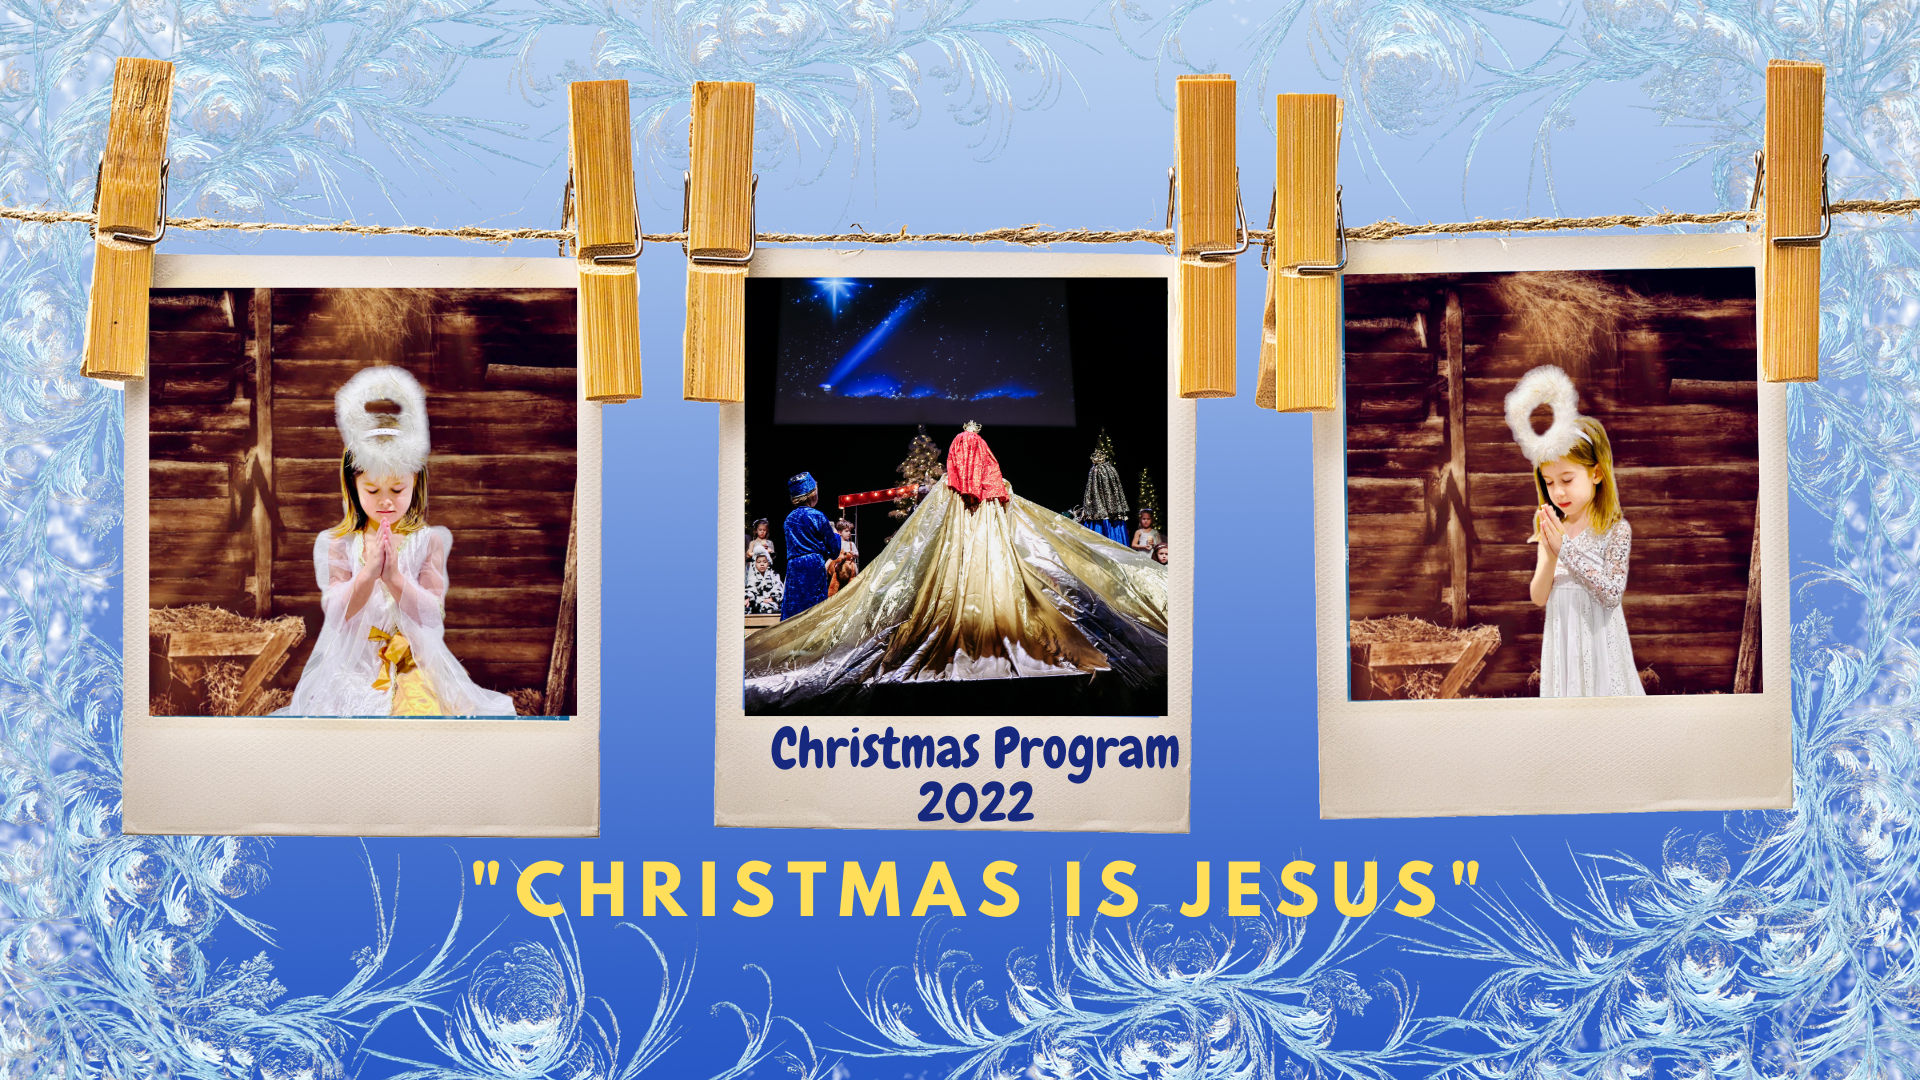 “Christmas is Jesus”